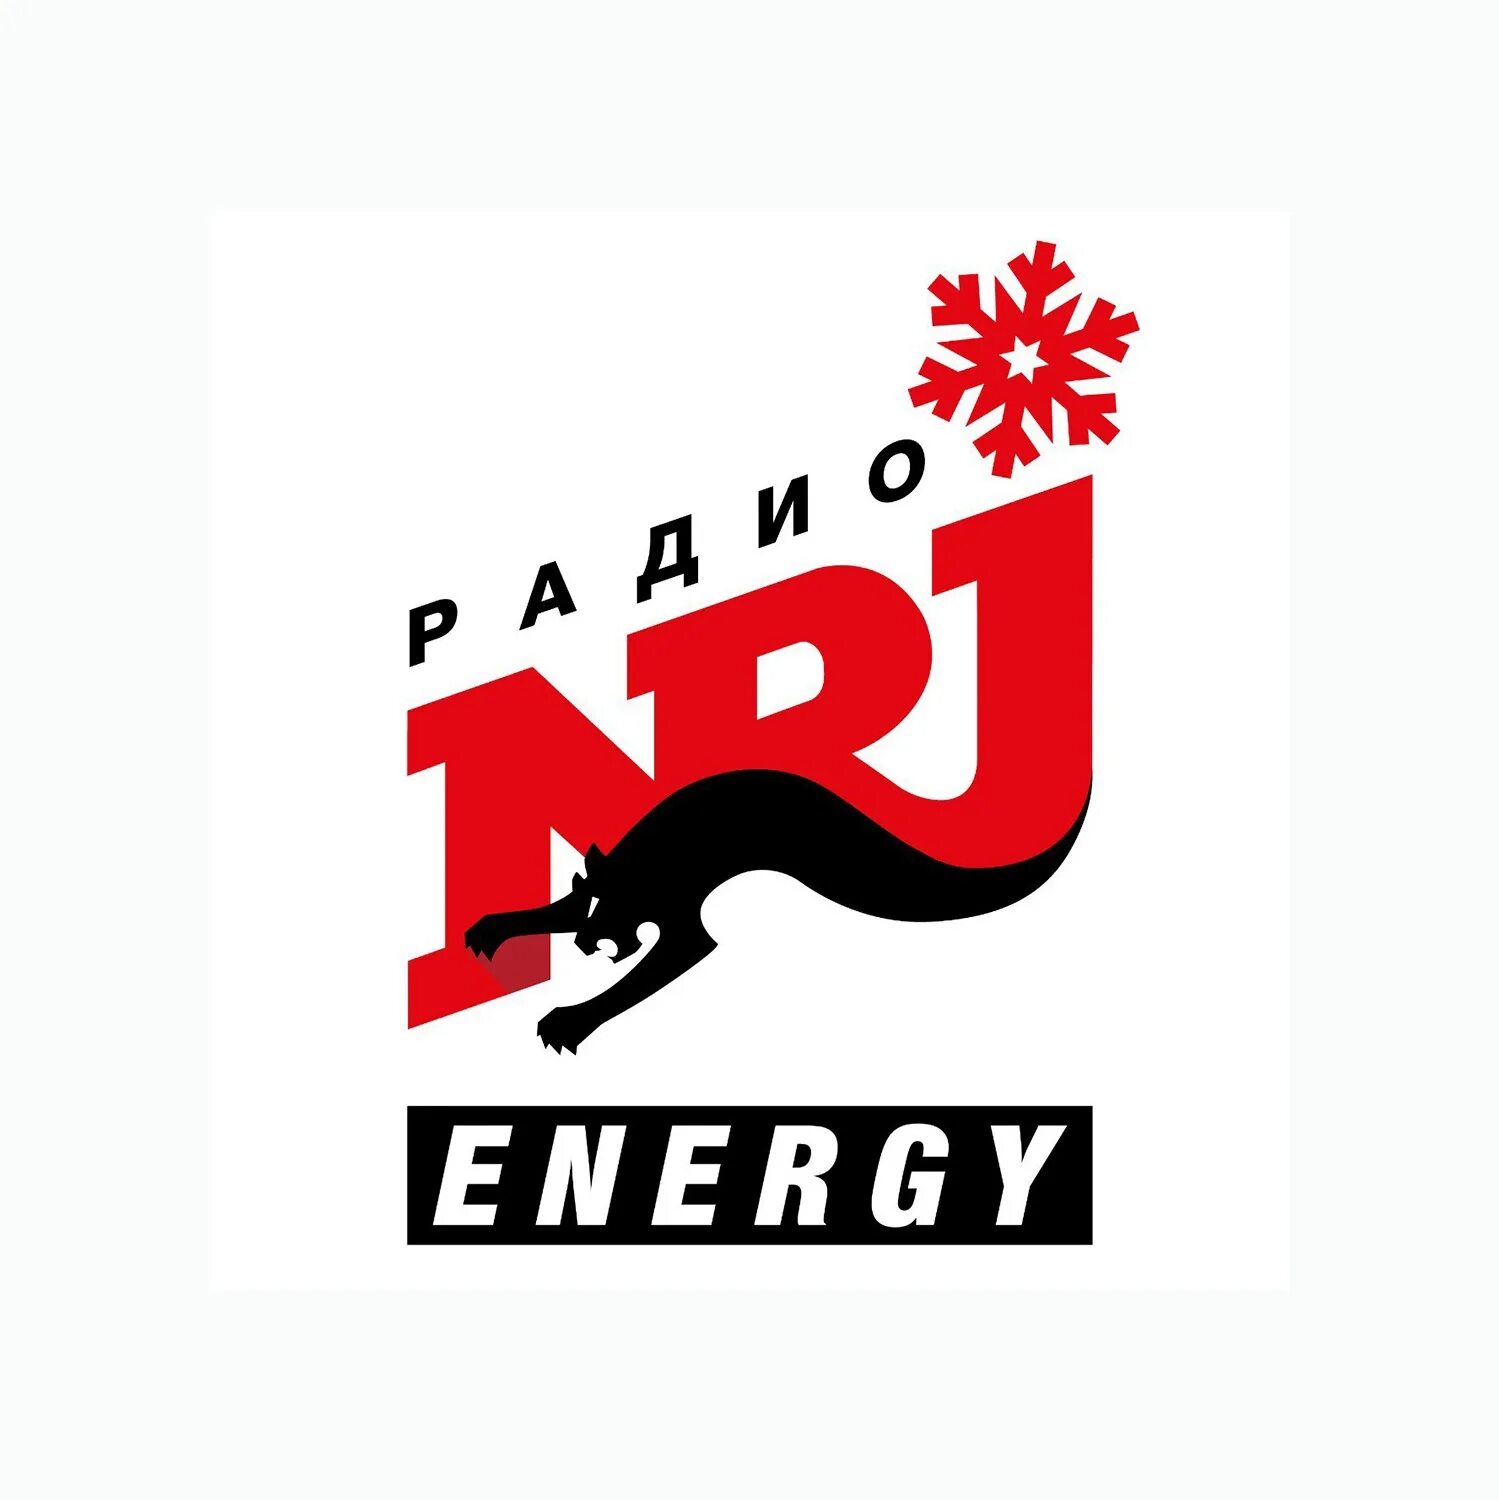 Включите радио energy. Радио Energy NRJ. Логотипы радиостанций. Энерджи логотип. Логотип радиостанции Энерджи.